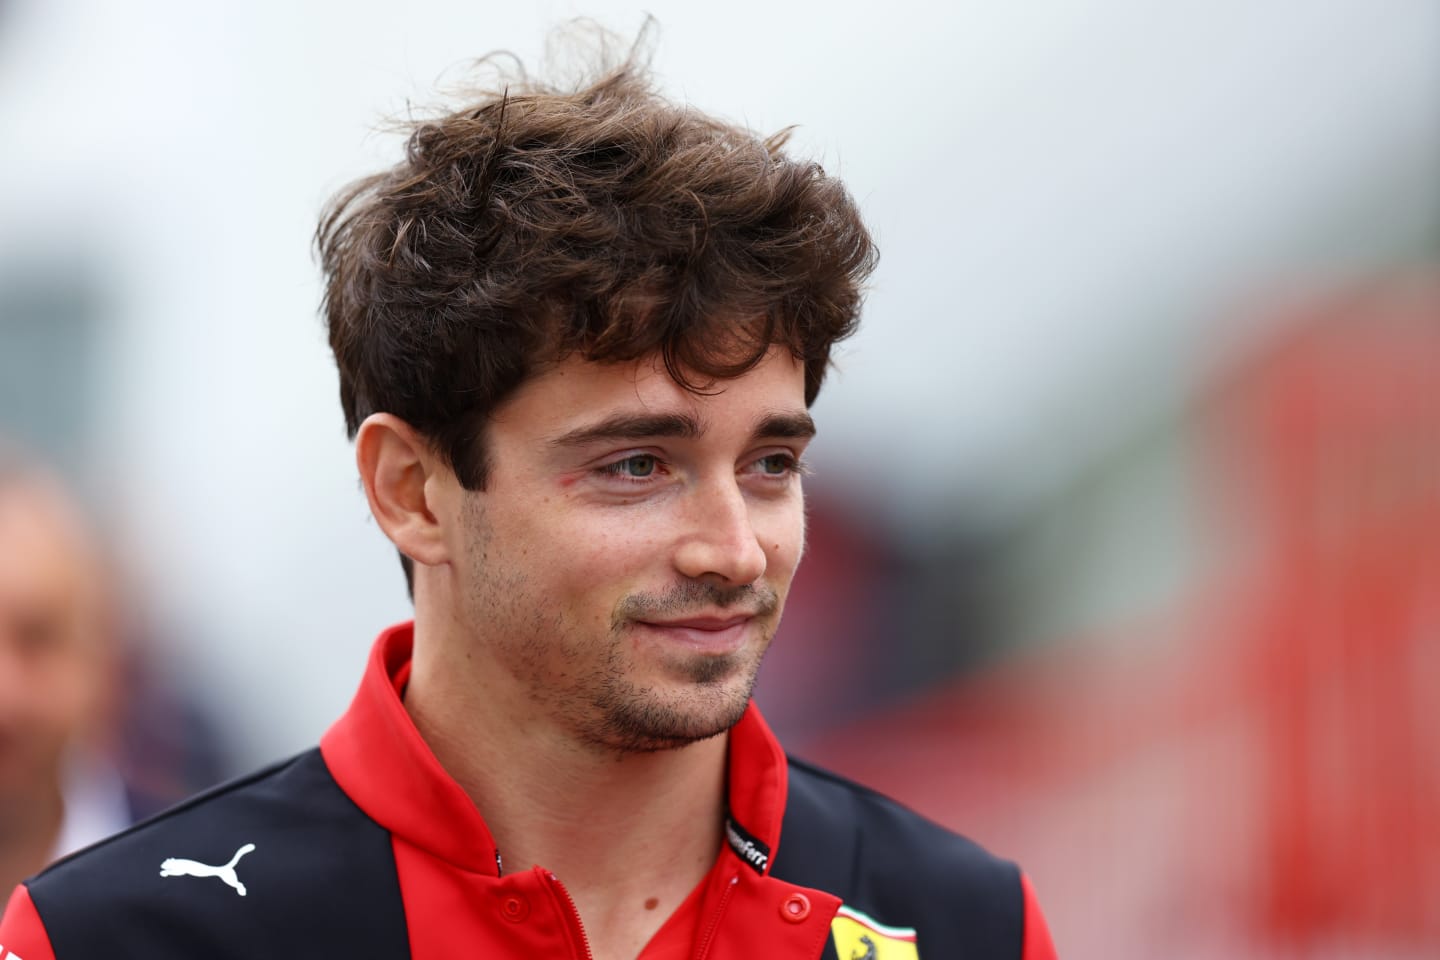 BAKU, AZERBAIJAN - APRIL 28: Charles Leclerc of Monaco and Ferrari looks on in the Paddock prior to